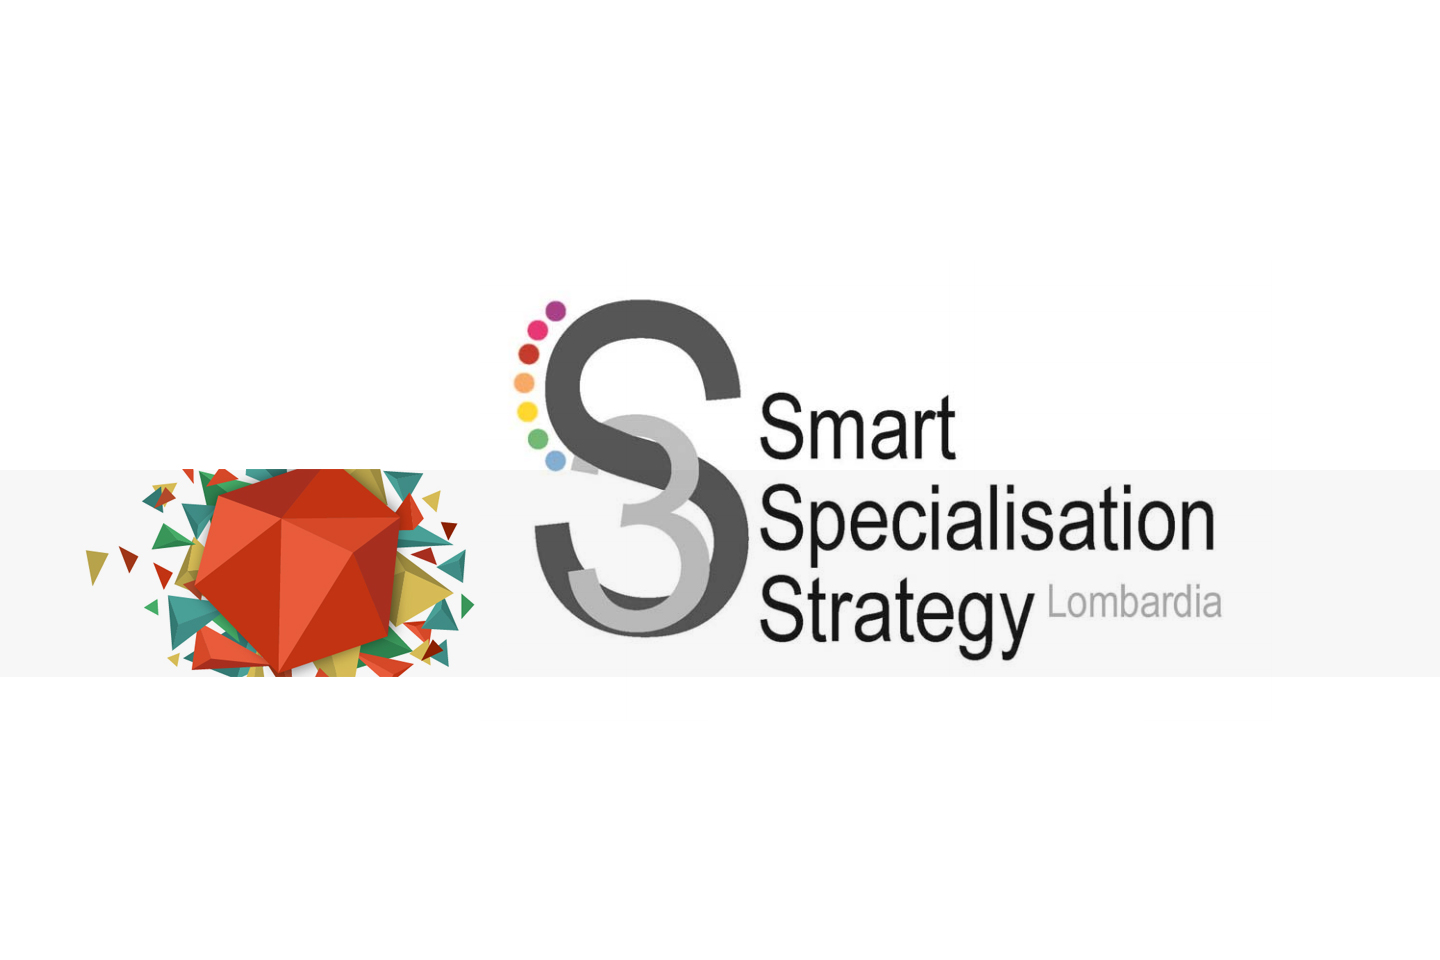 Smart Specialisation Strategy Lombardia